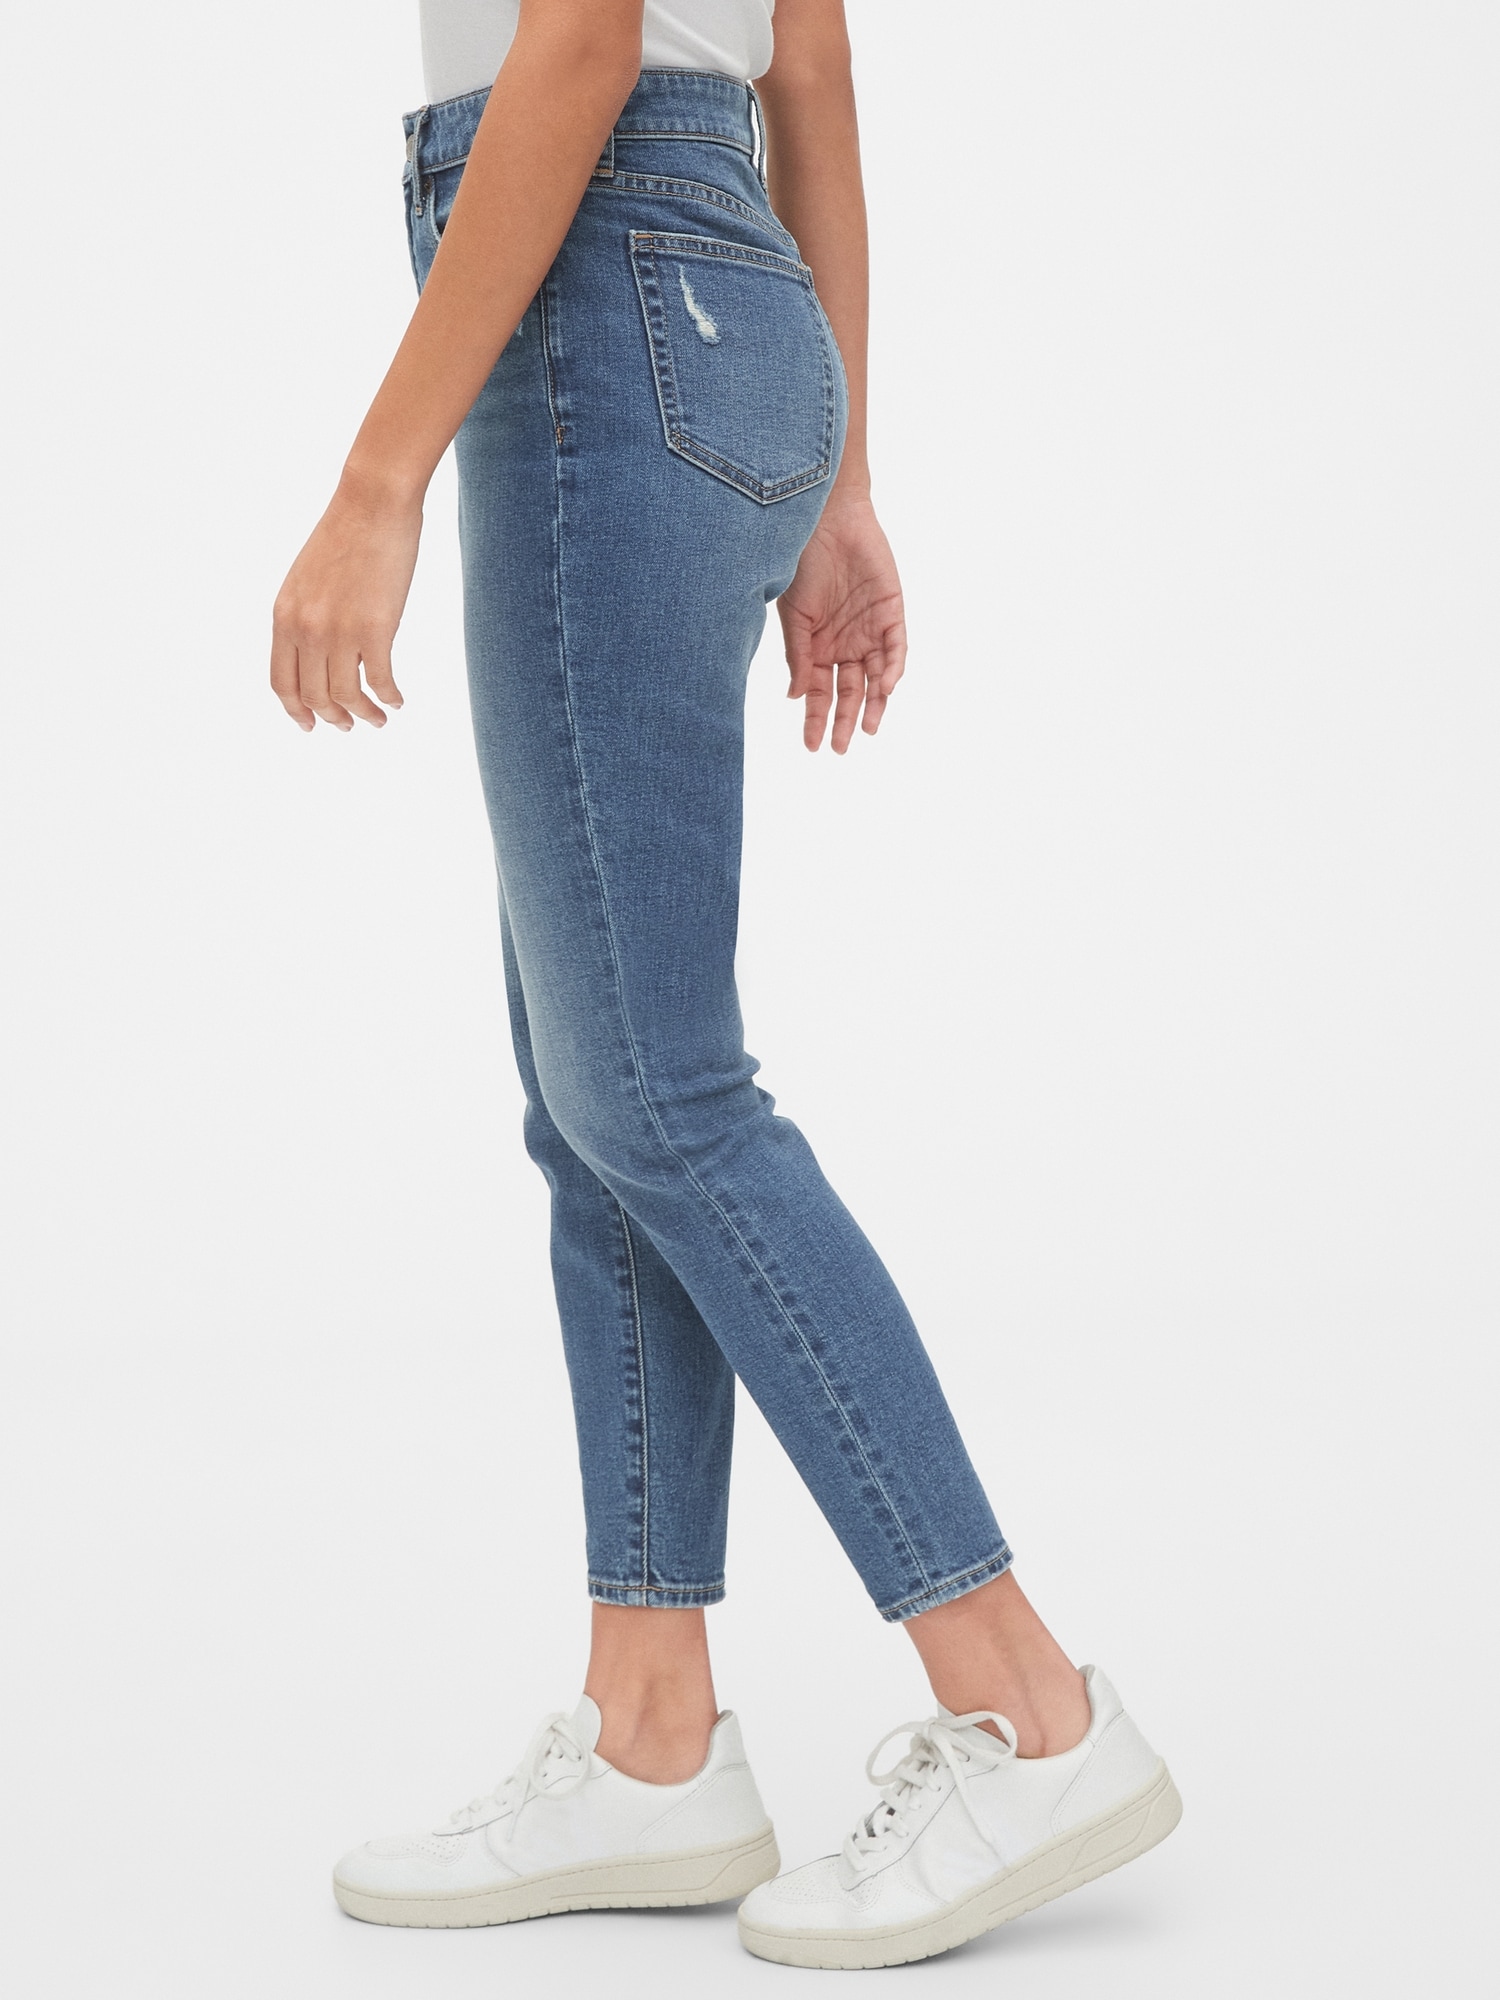 true skinny gap jeans